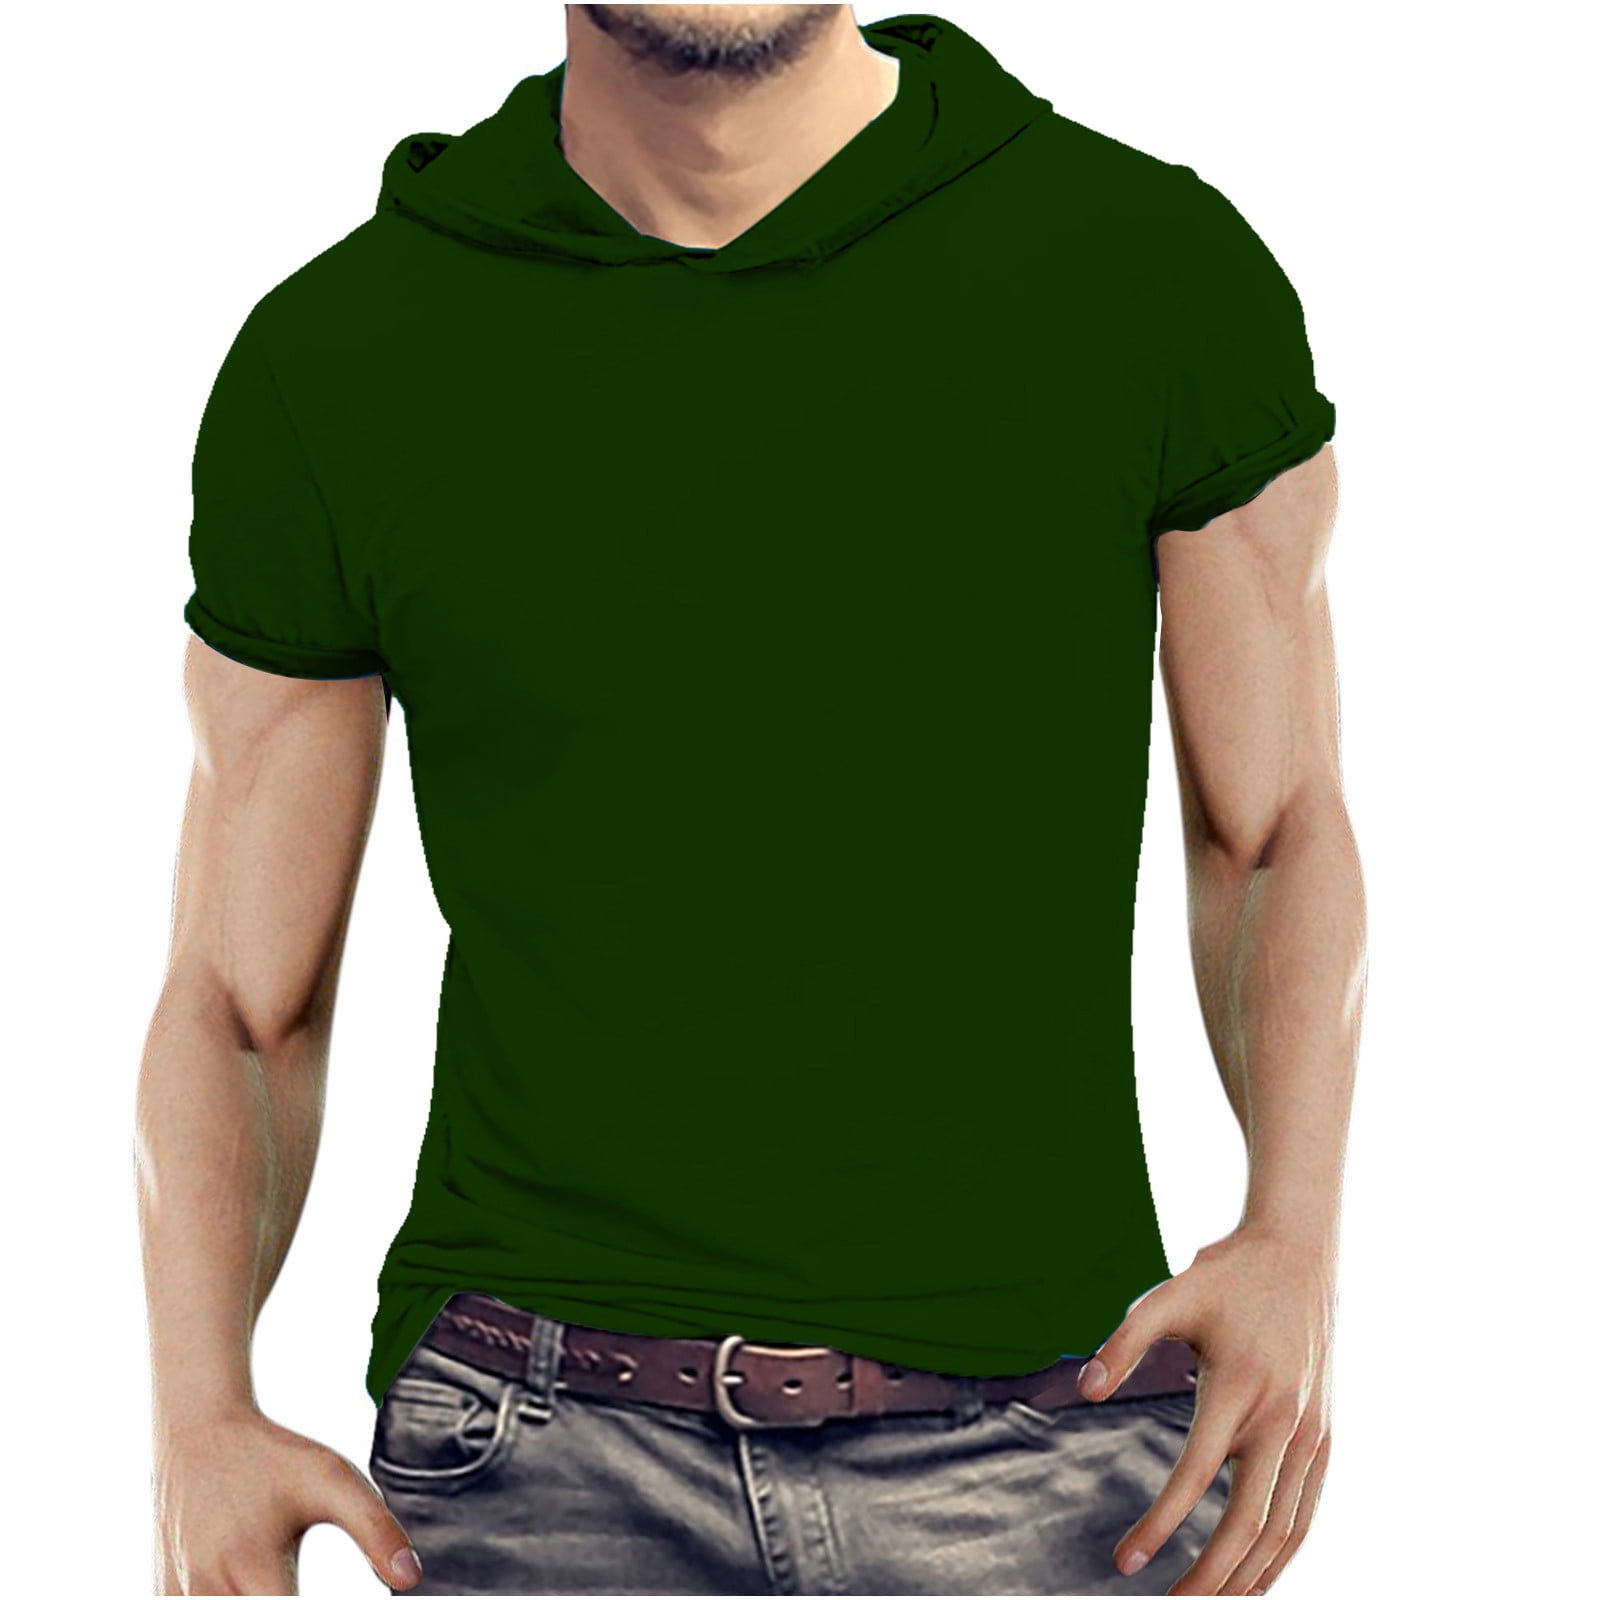 louisiana' Print, Men's Short Sleeve Hoodie Hooded Tshirt, Casual